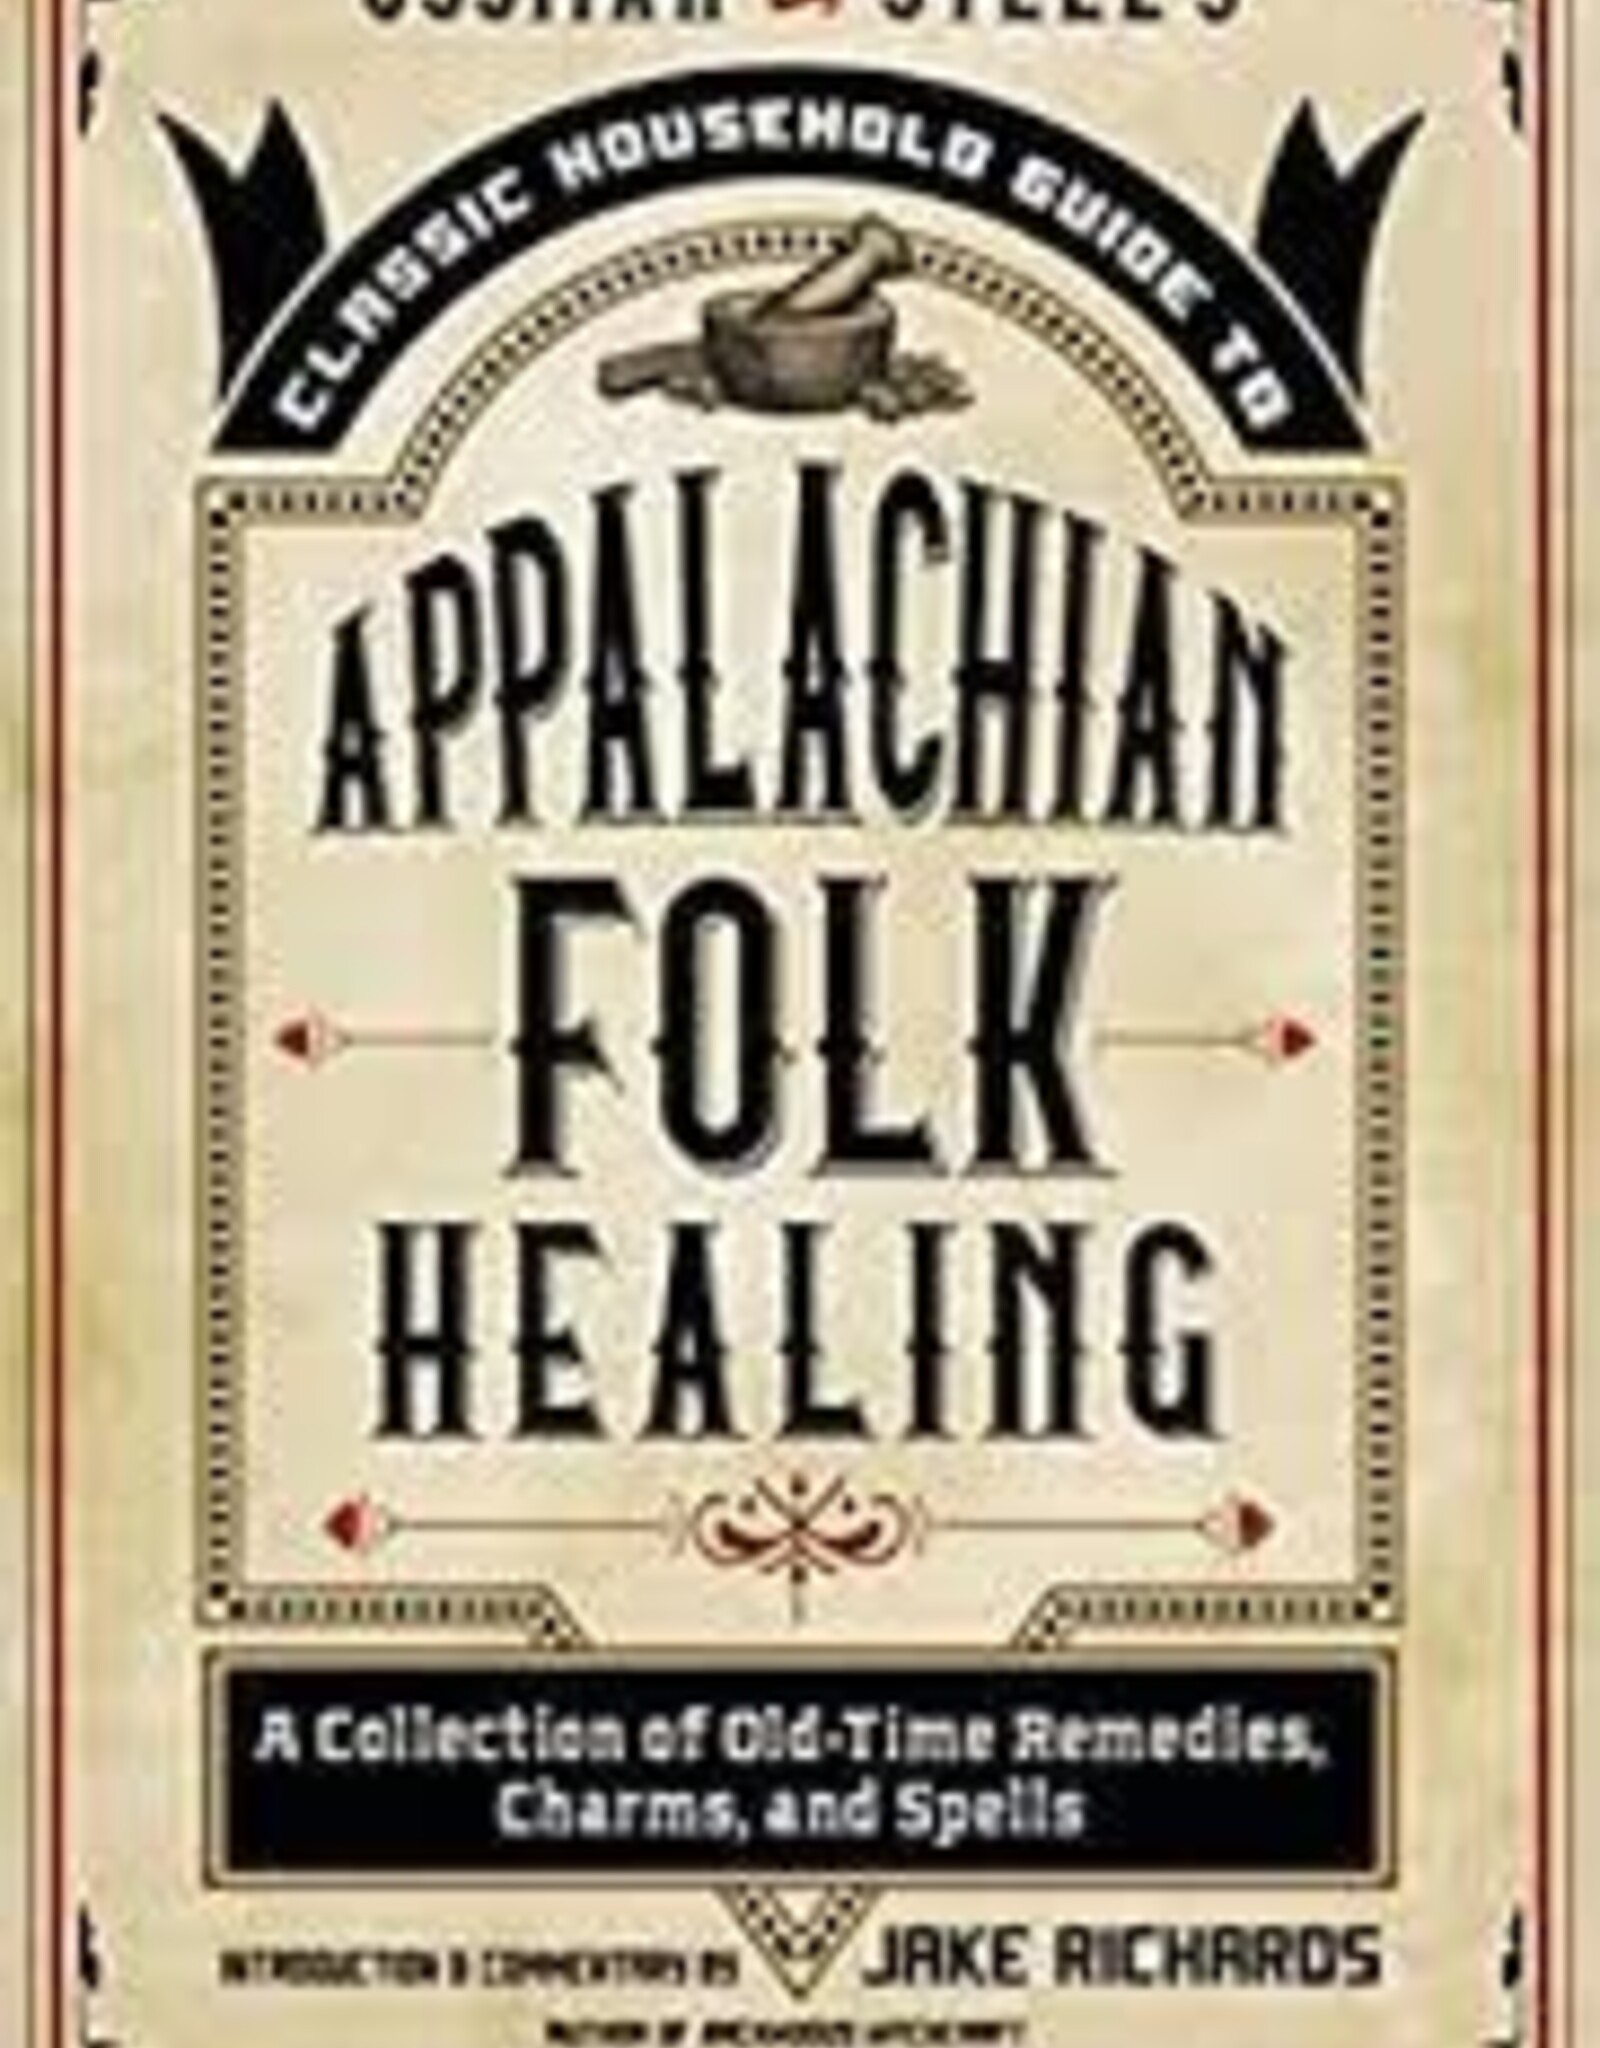 Appalachian Folk Healing